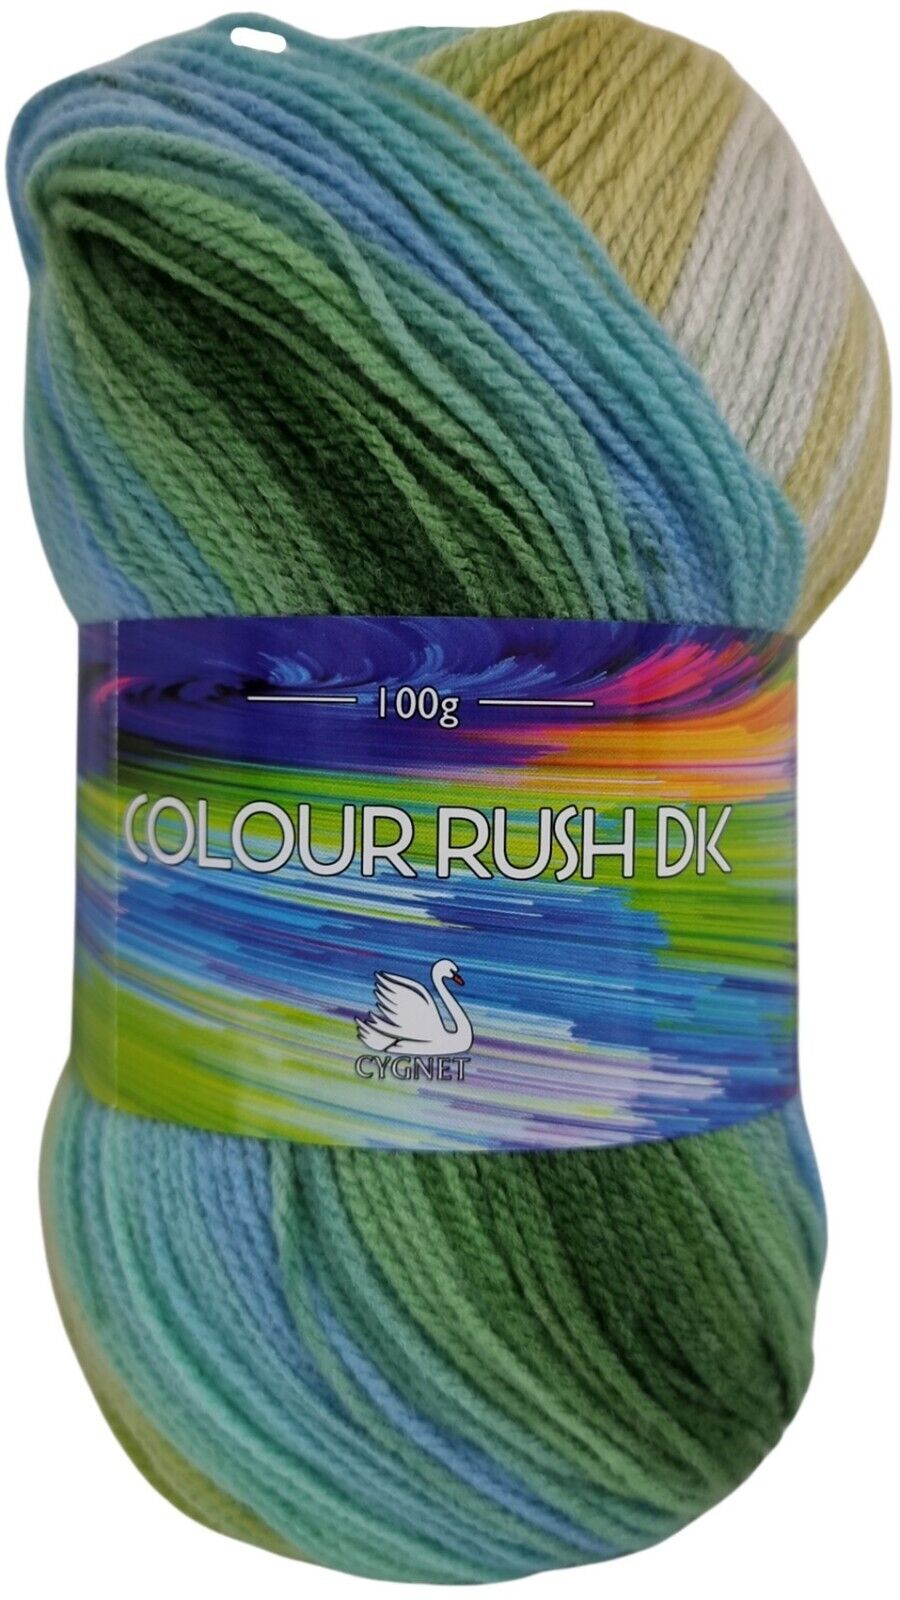 Cygnet COLOUR RUSH DK Knitting Yarn / Wool - 100g Double Knit Ball - Seafoam